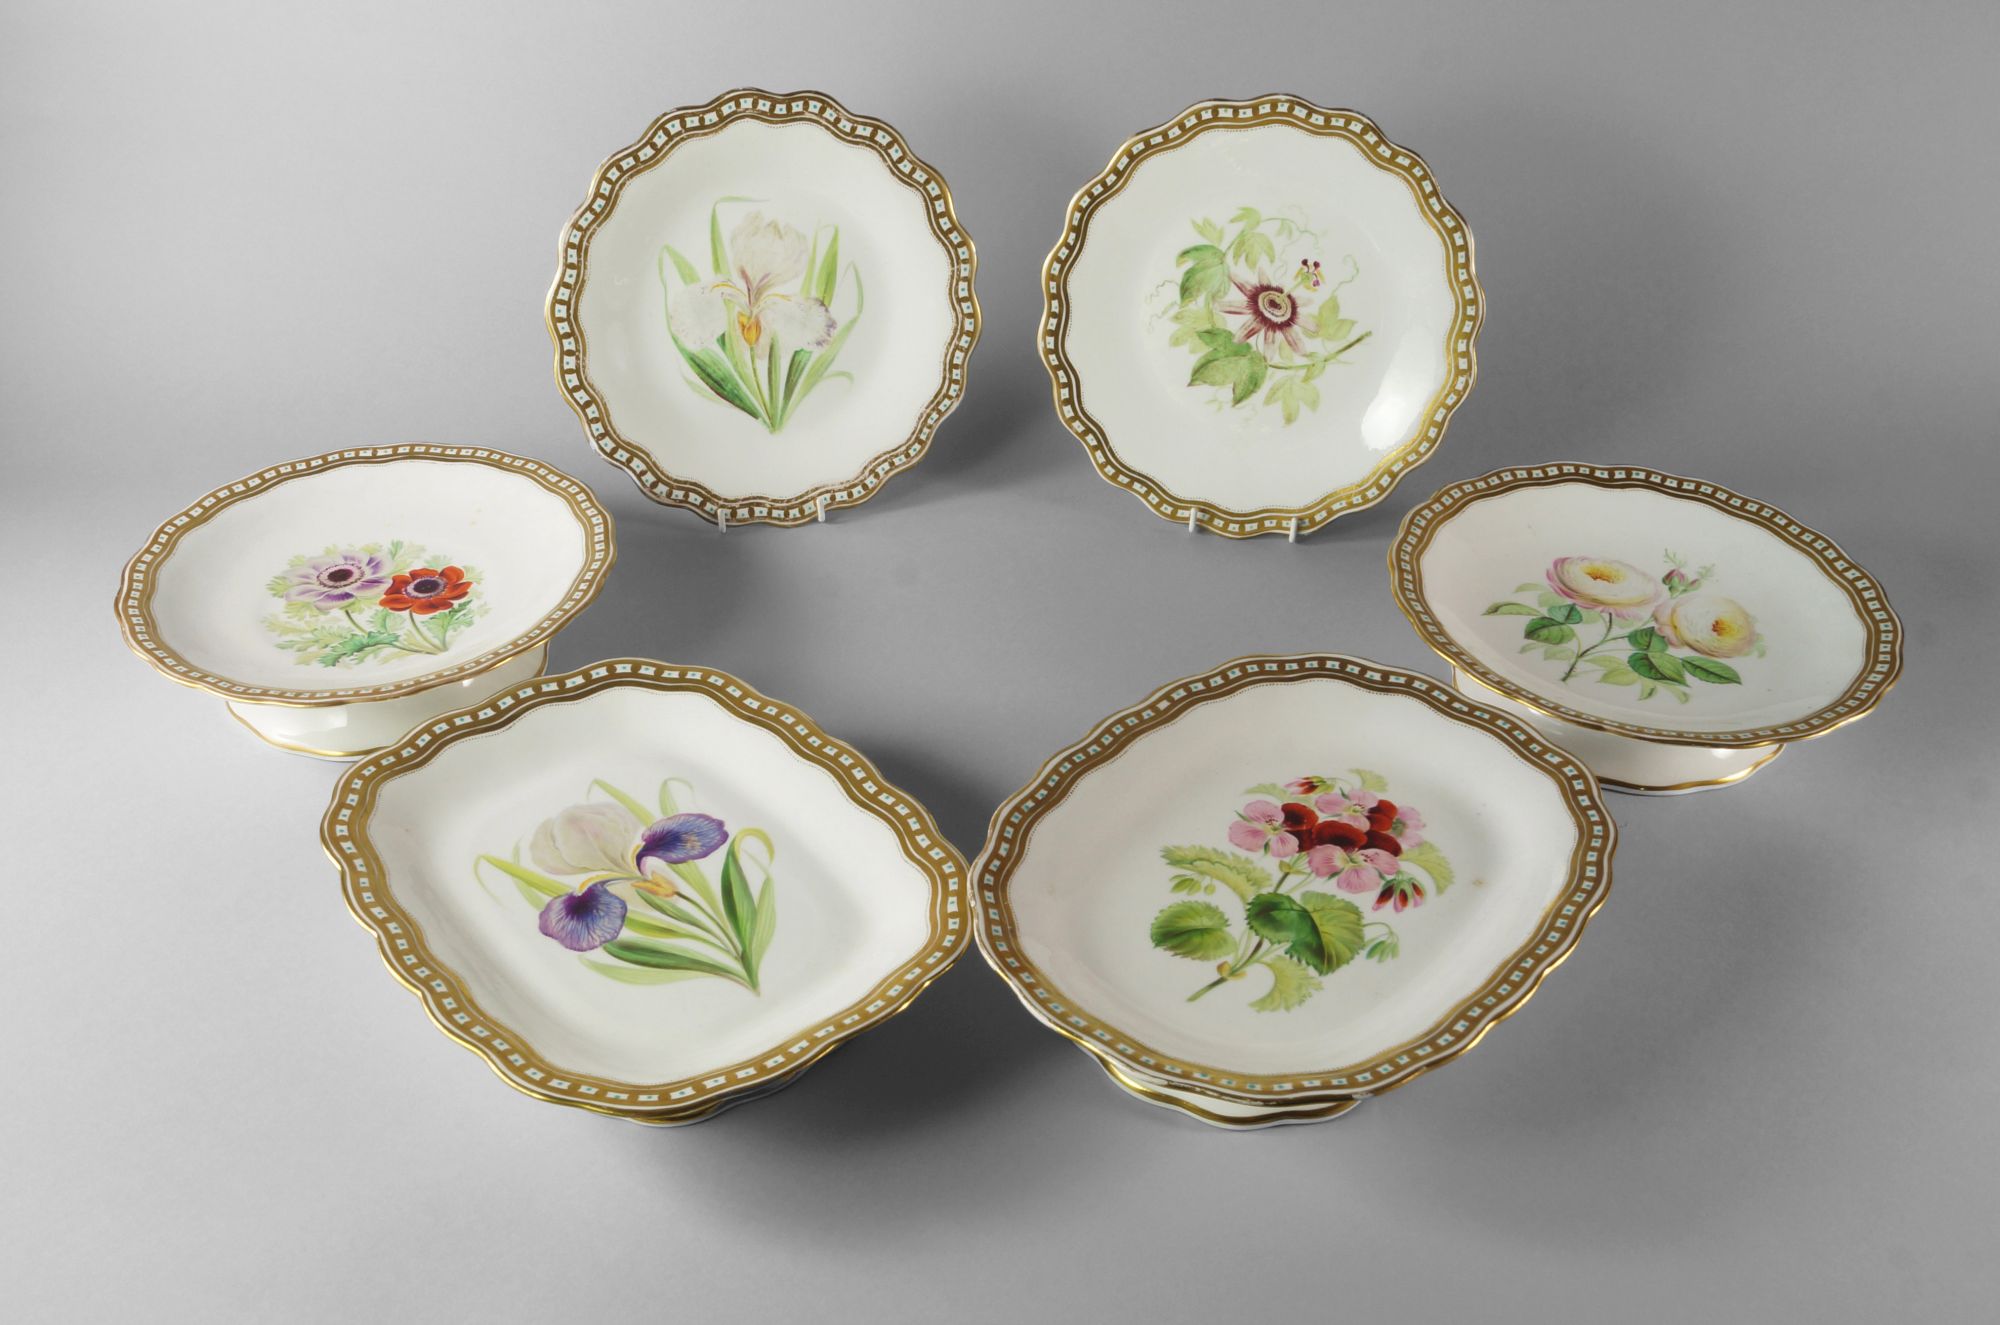 An English porcelain dessert service, mid 19th century,